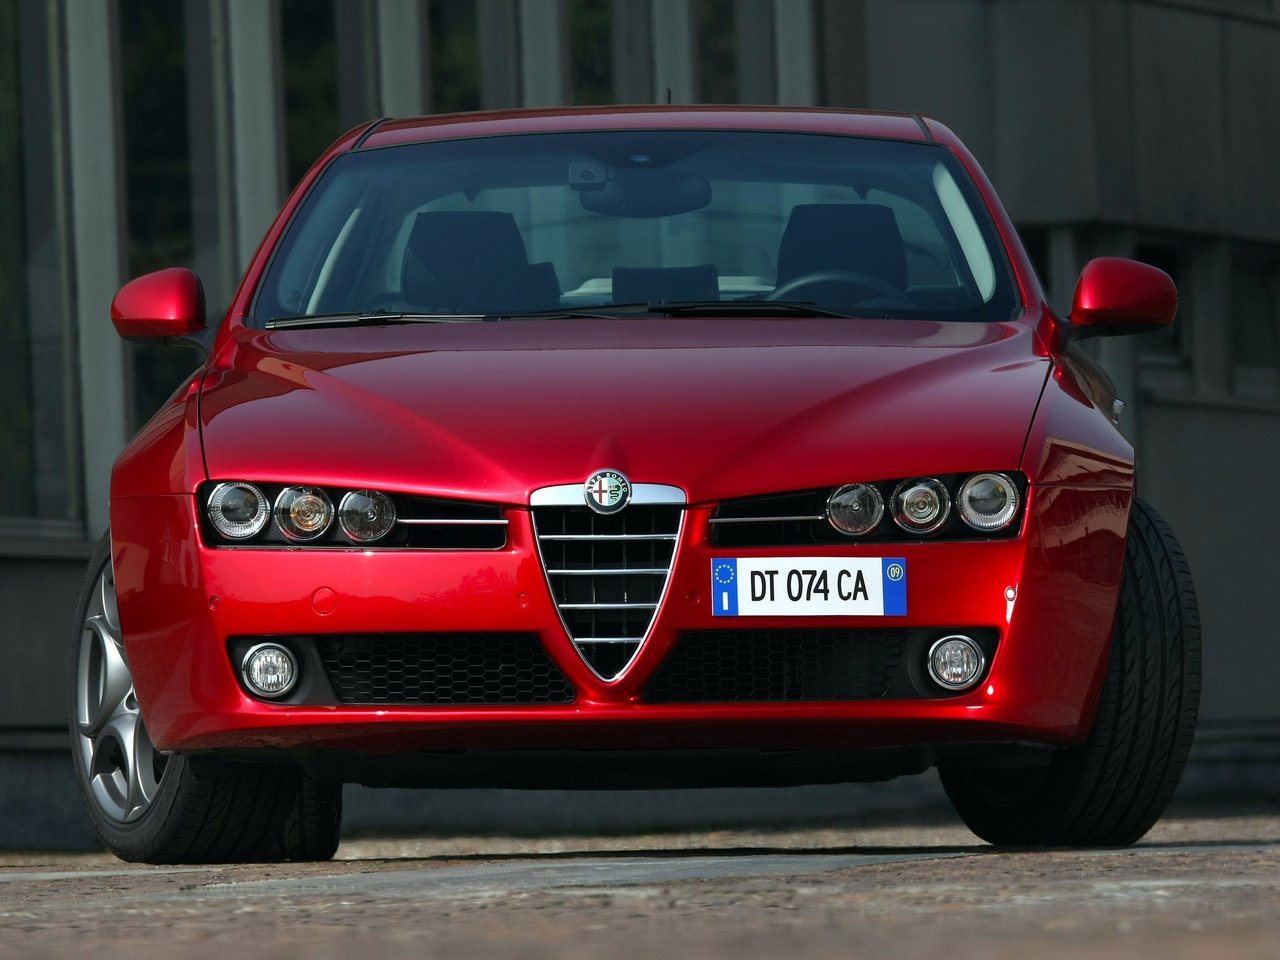 Альфа без ромео. Альфа Ромео 159. Автомобиль Альфа Ромео 159. Alfa Romeo 159 седан. Alfa Romeo Alfa 159.